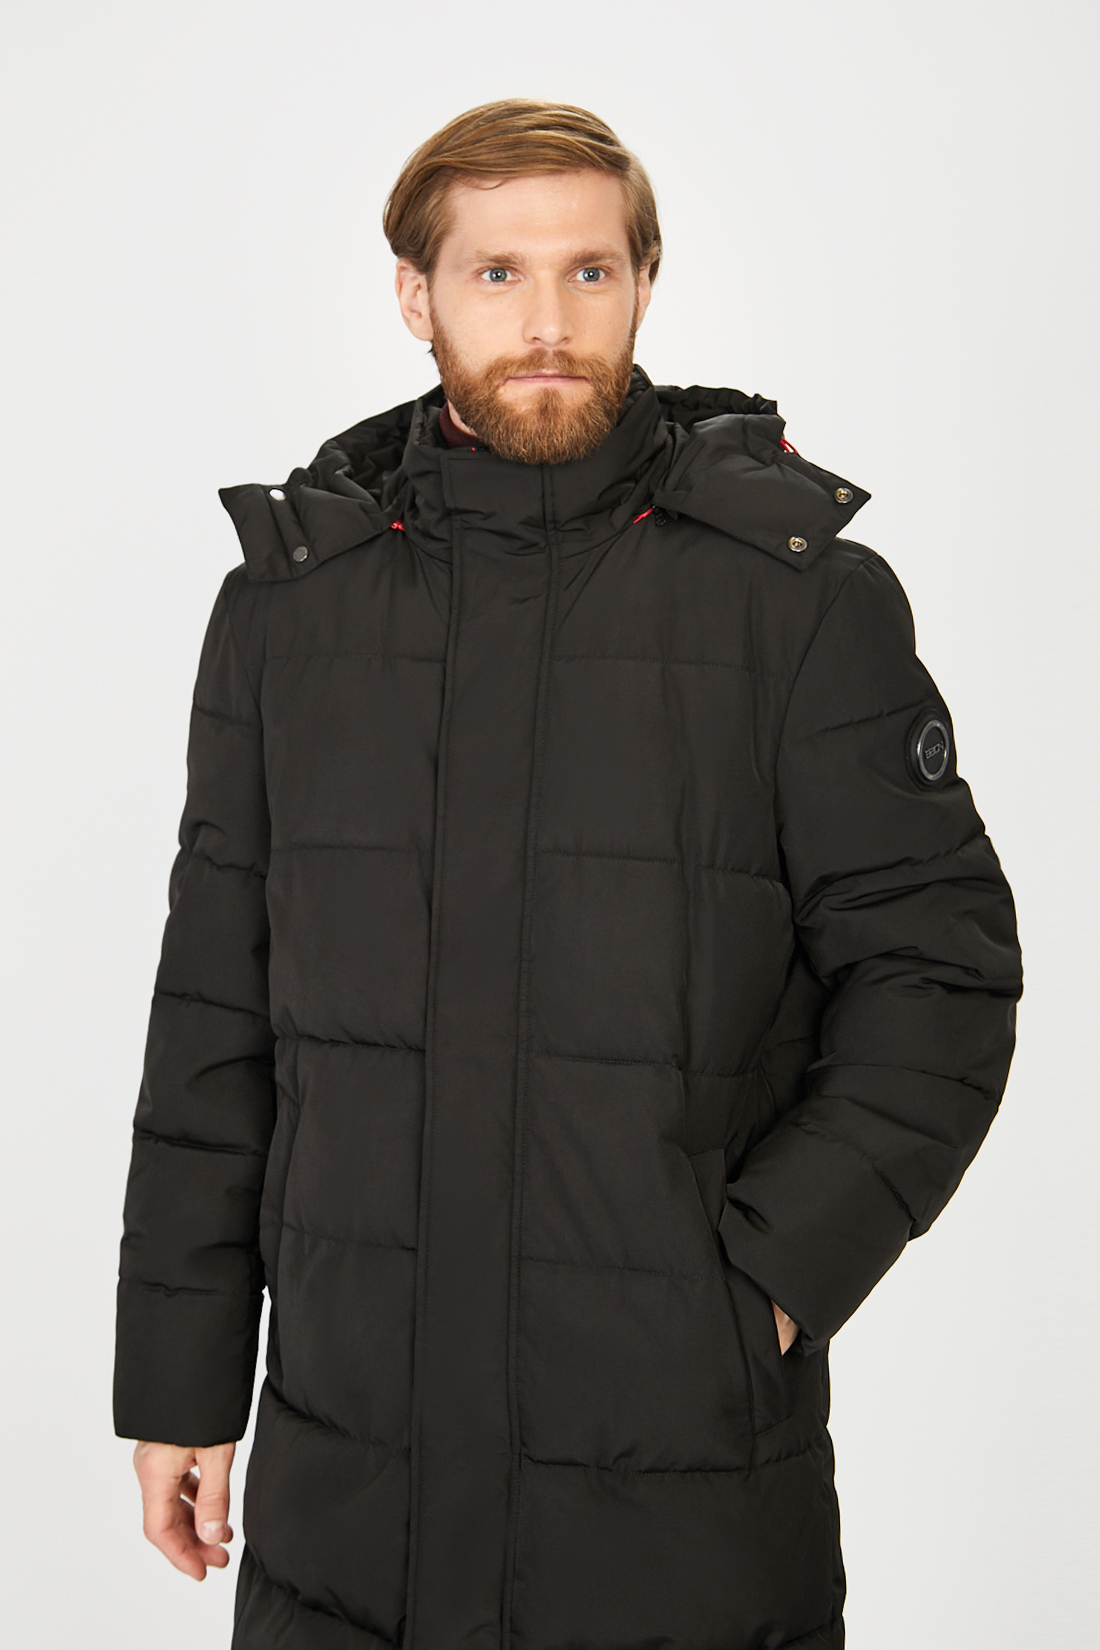 Куртка (Эко пух) (арт. baon B541506), размер S, цвет черный Куртка (Эко пух) (арт. baon B541506) - фото 6